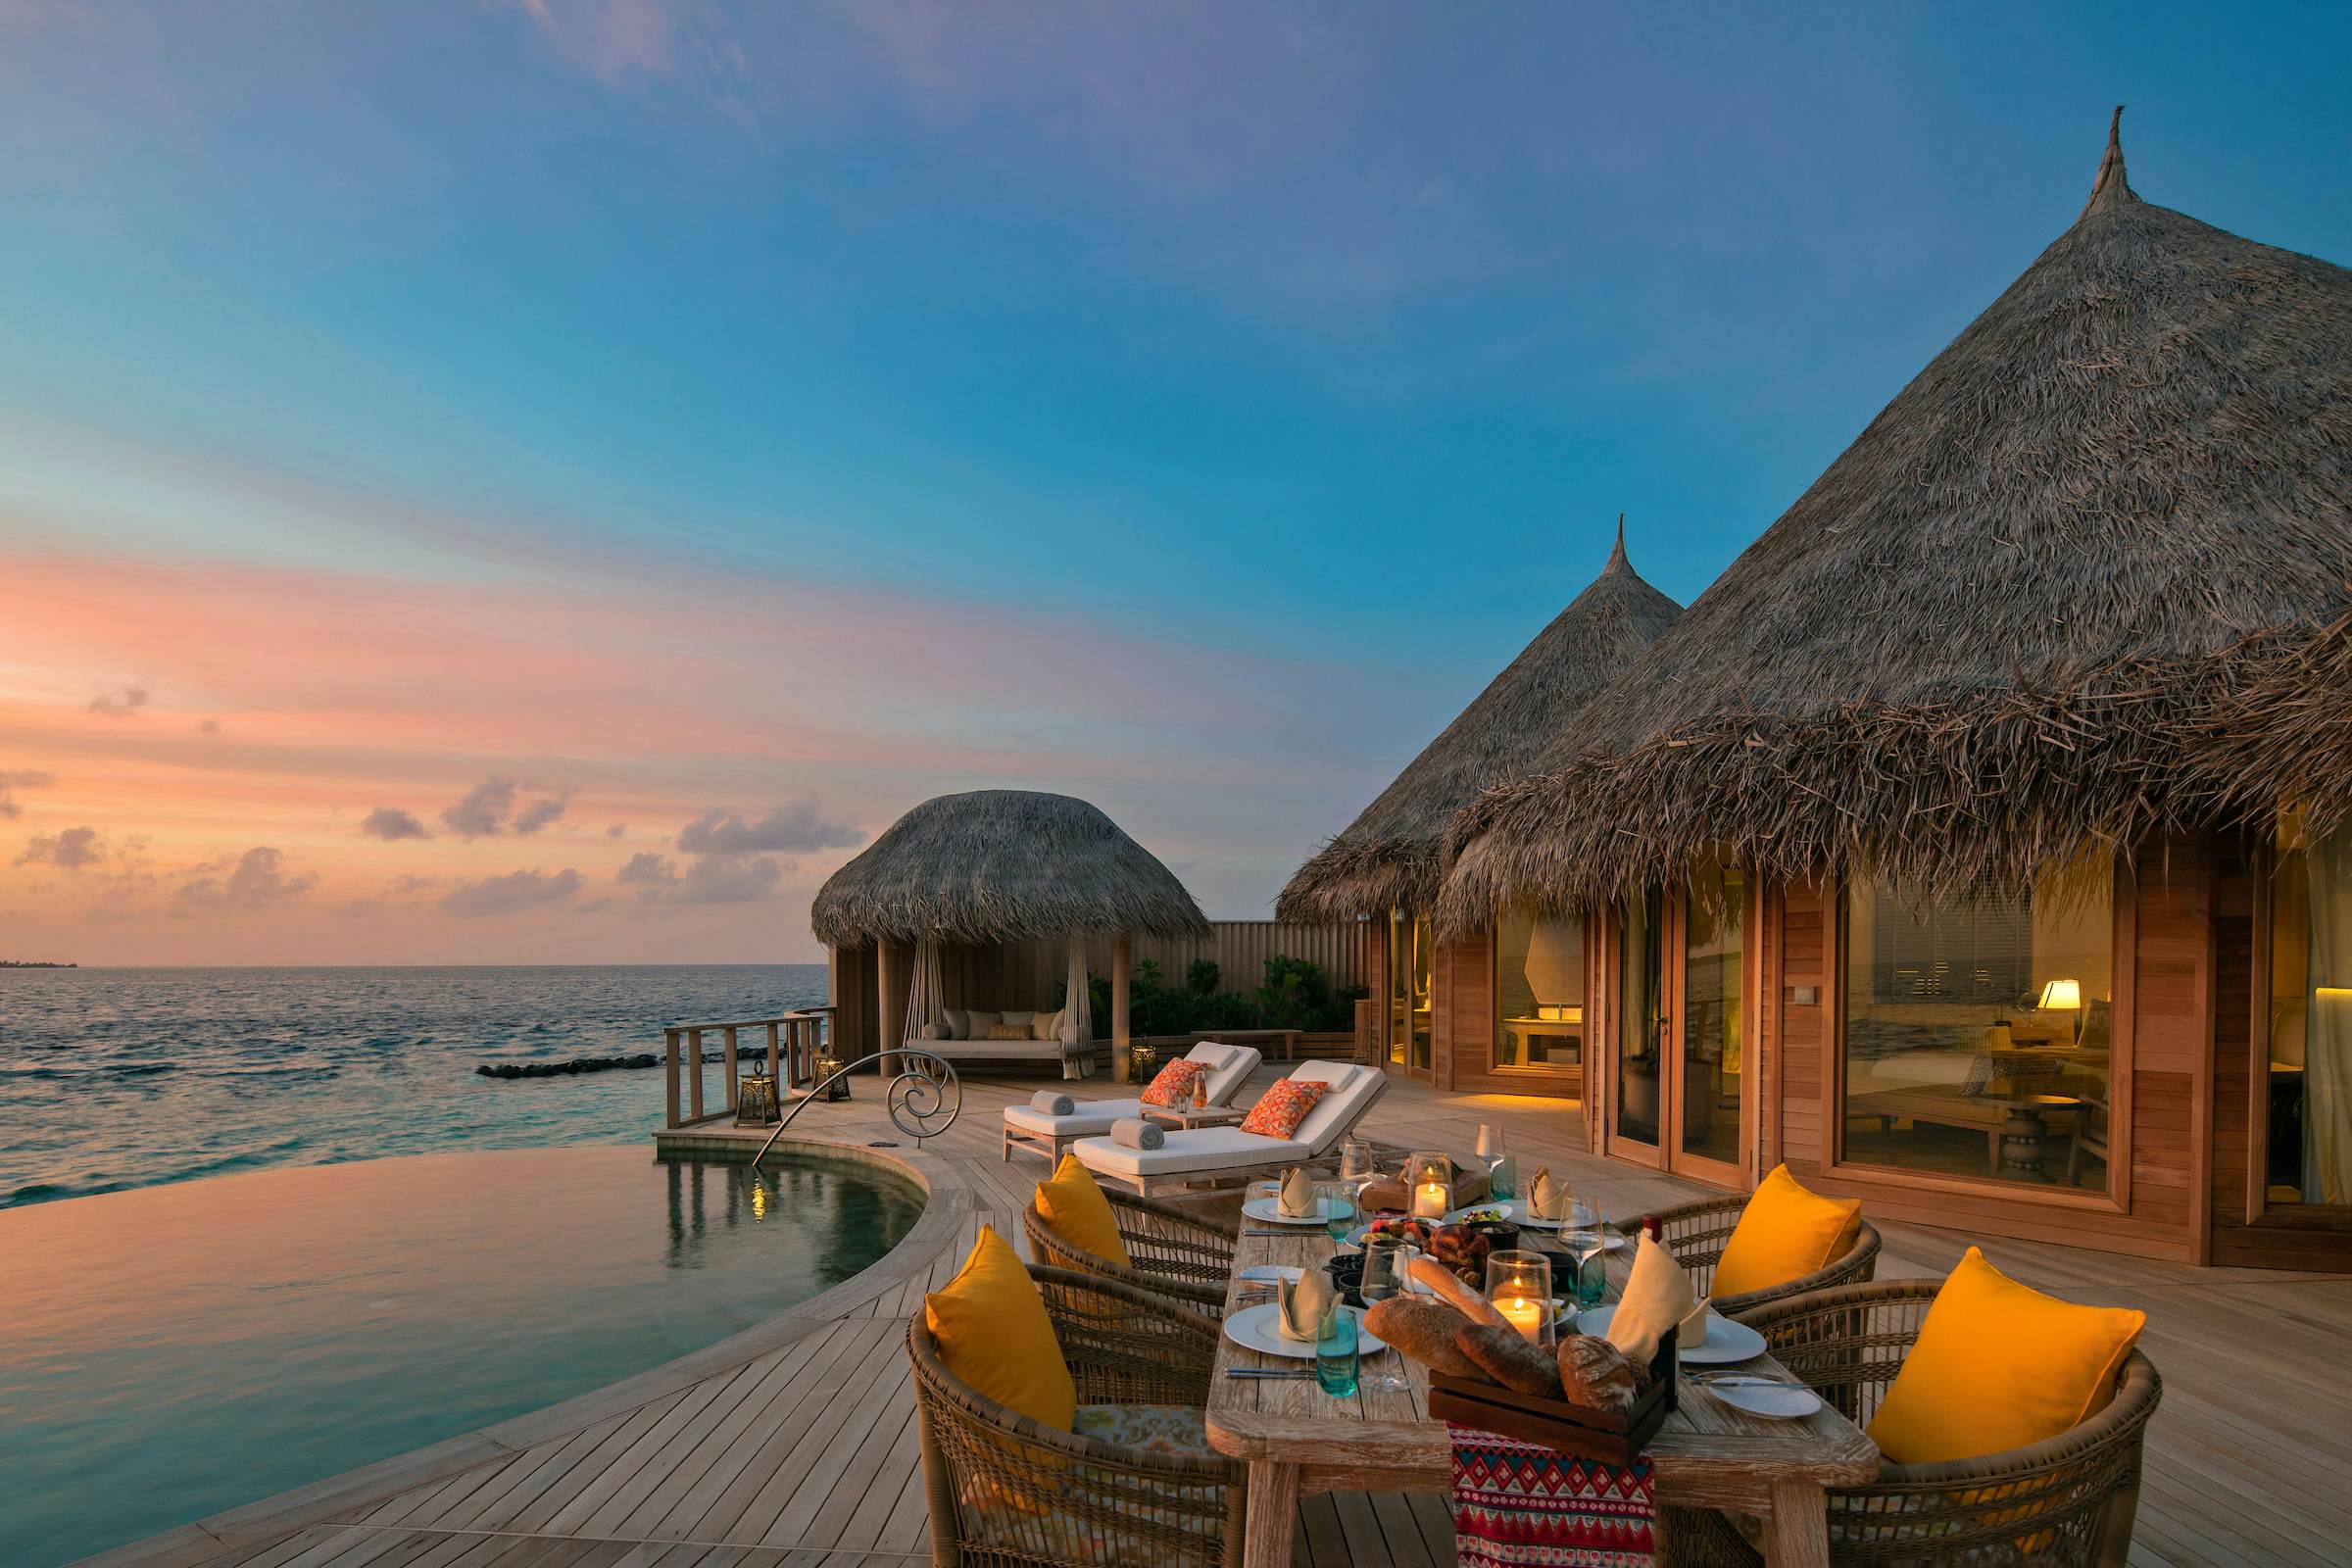 Maldives offers beautiful sceneries